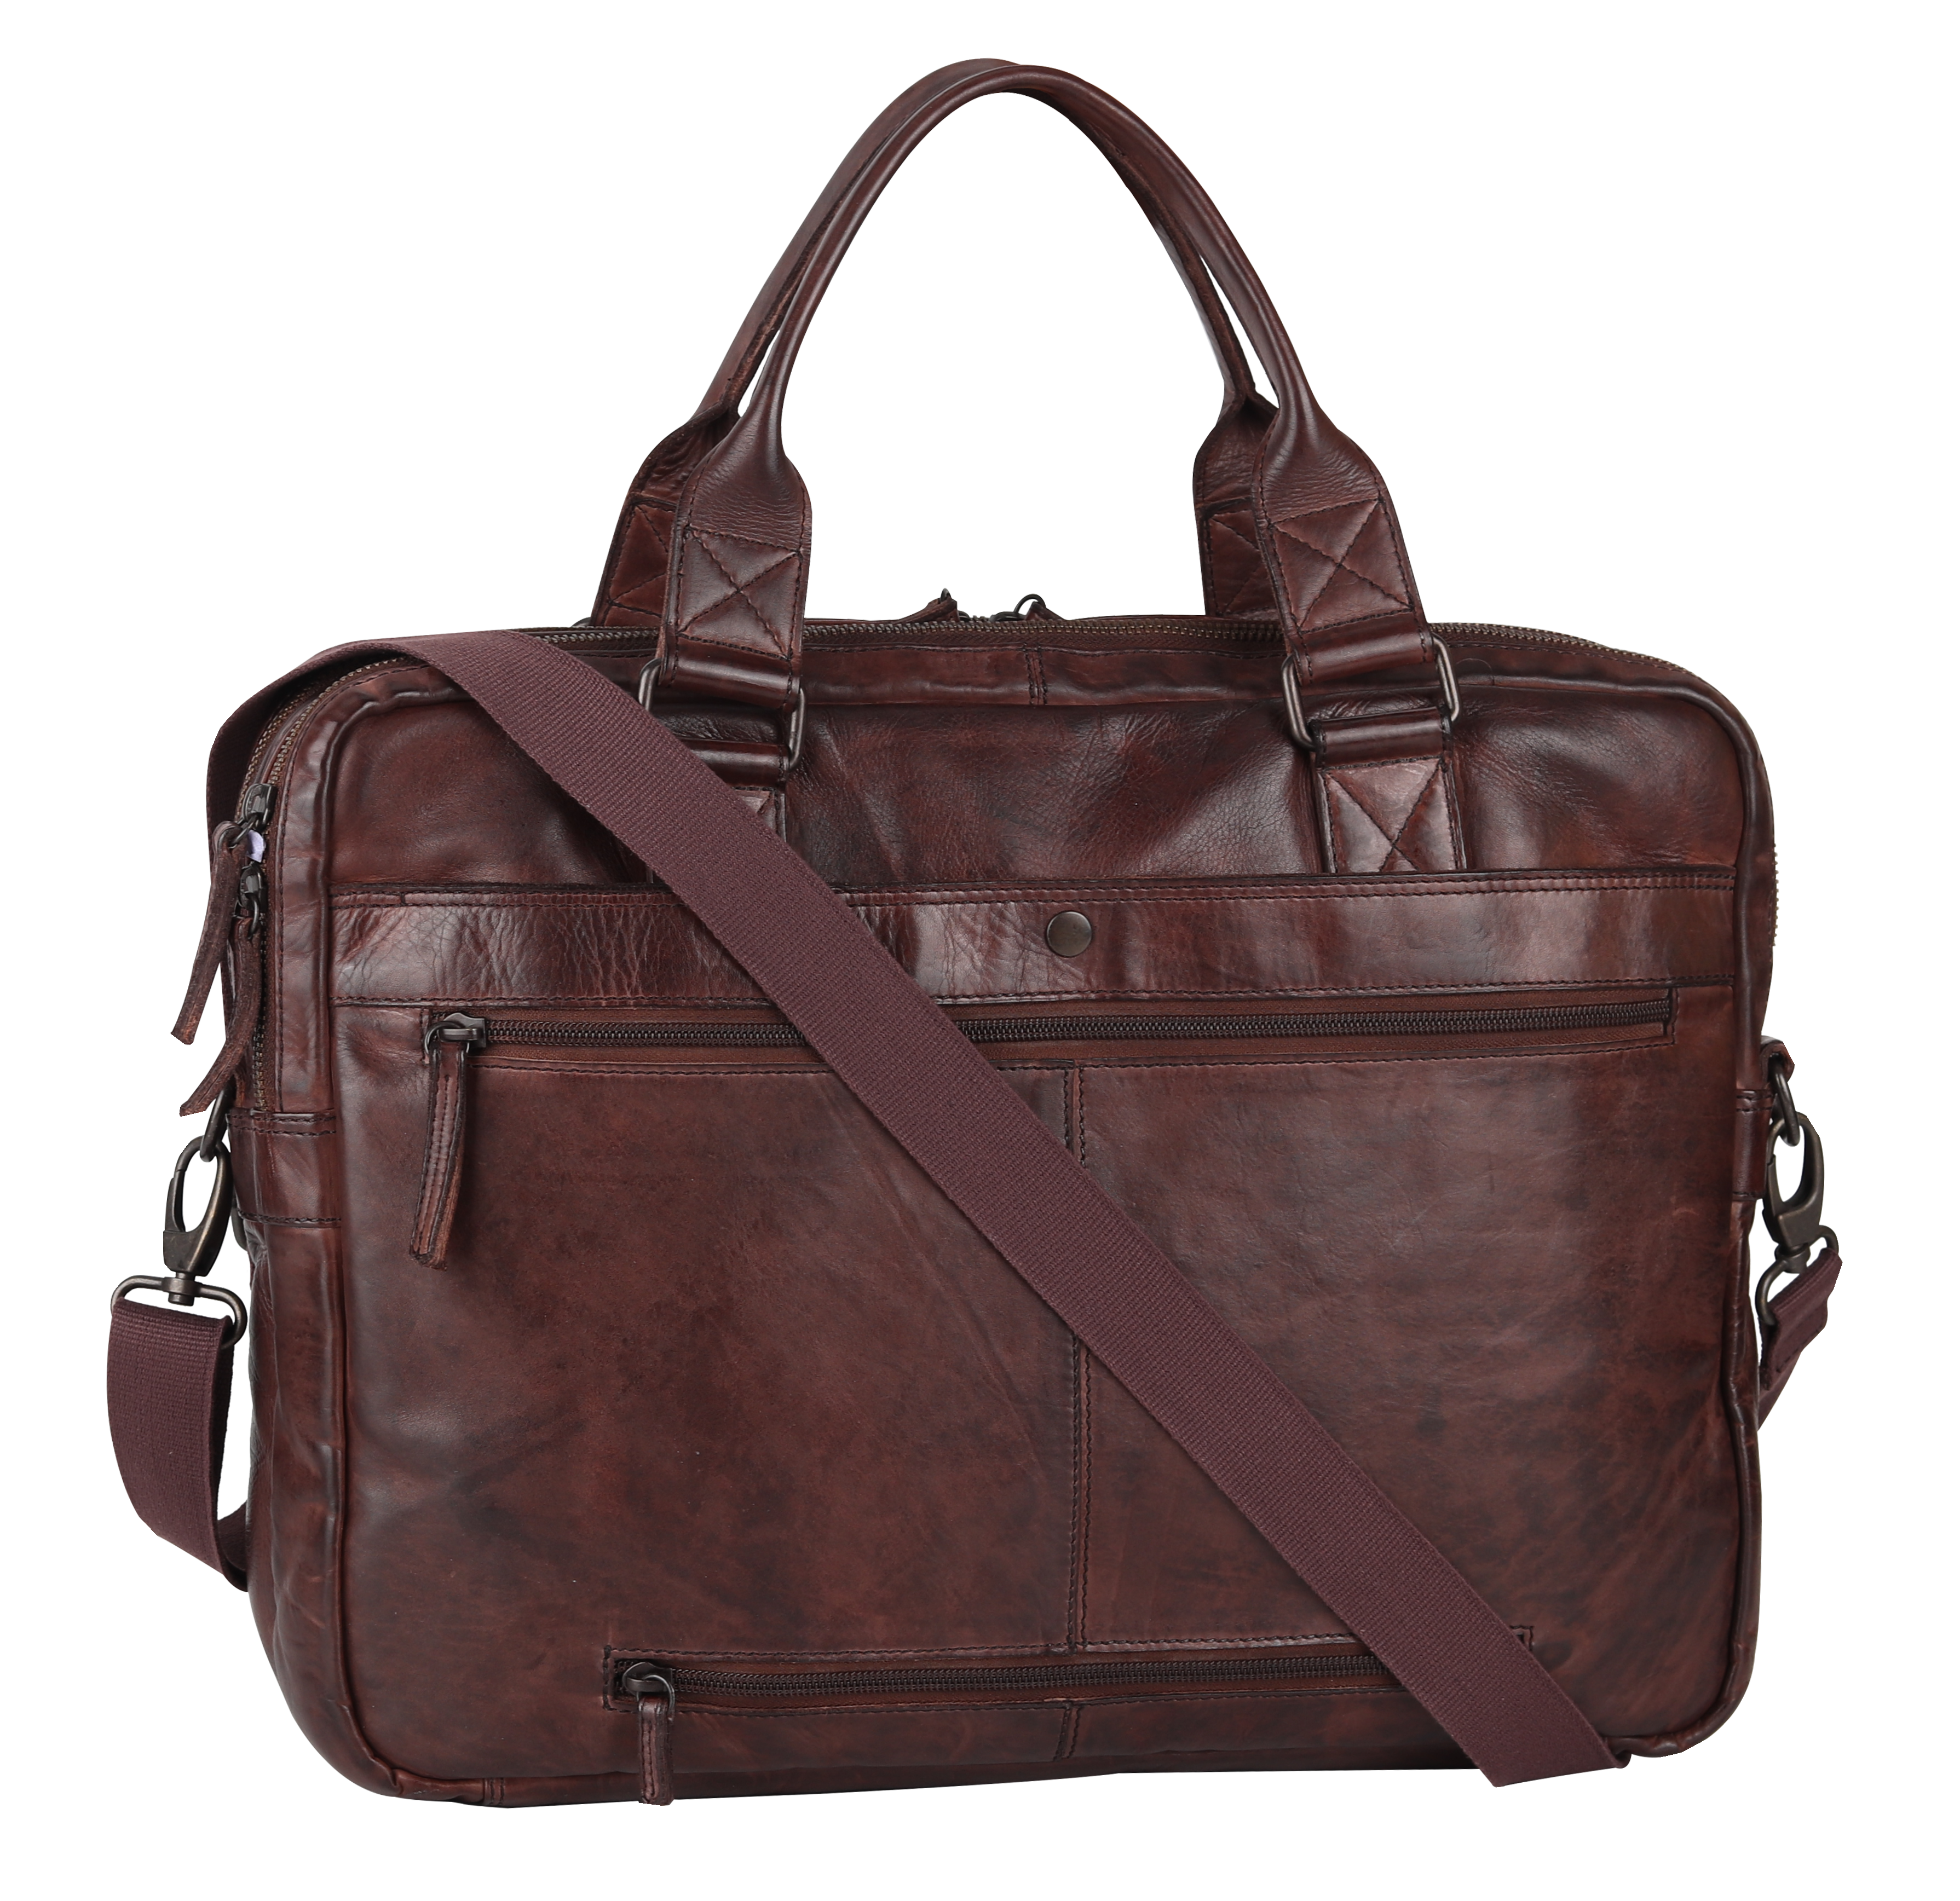 BOL Front Zip Leather Laptop Bag